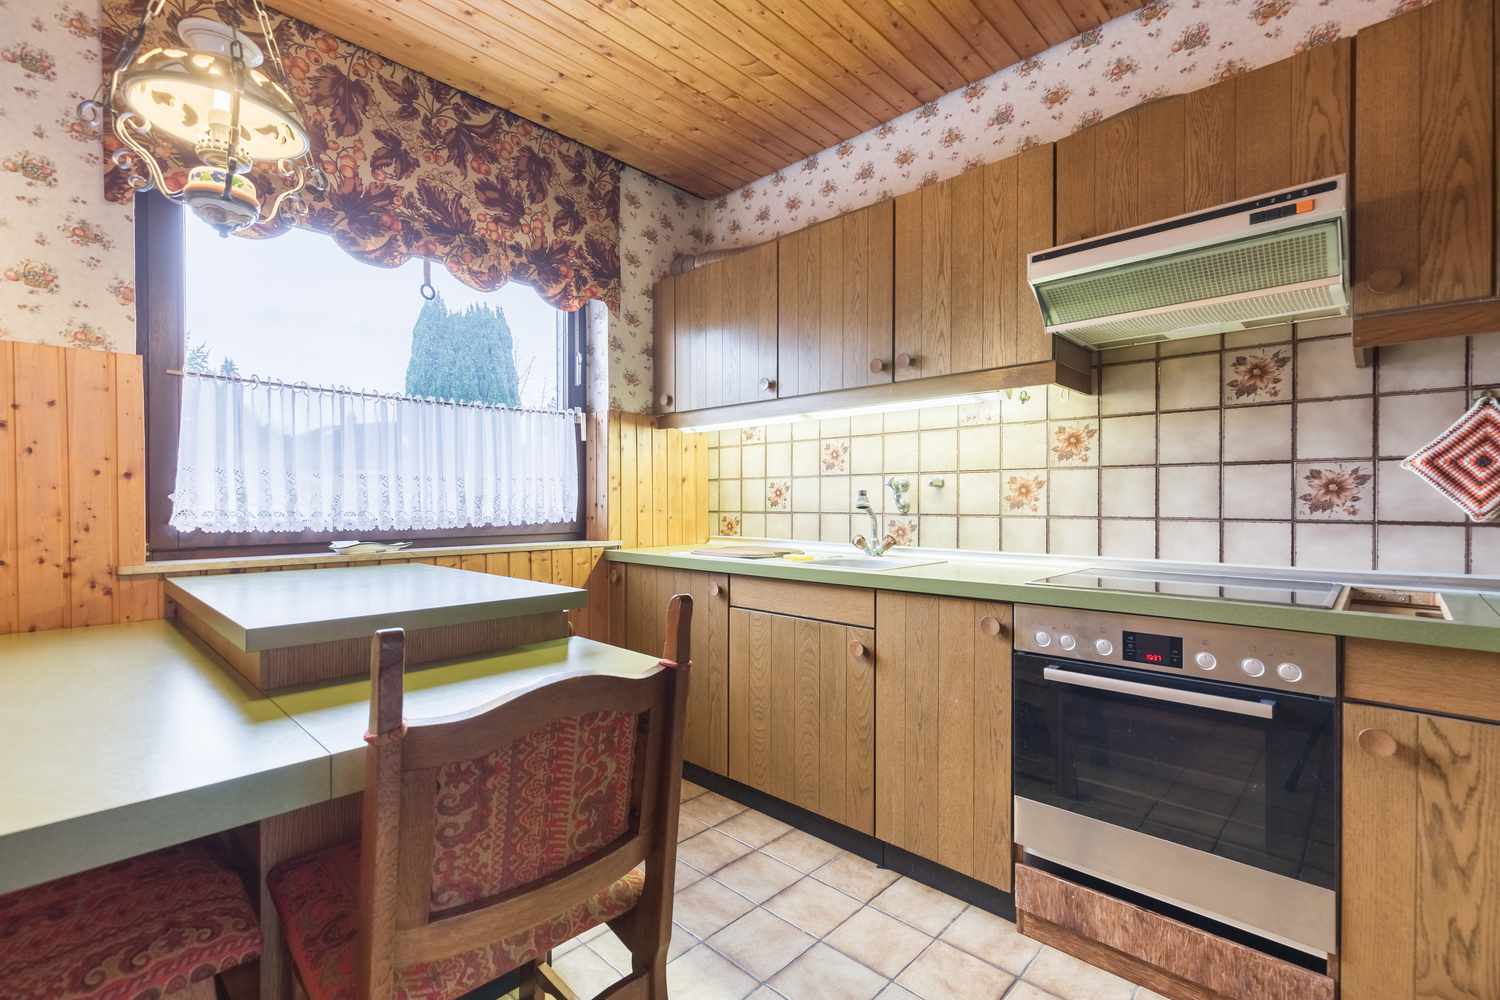 How to redo 70s-era kitchen cabinets